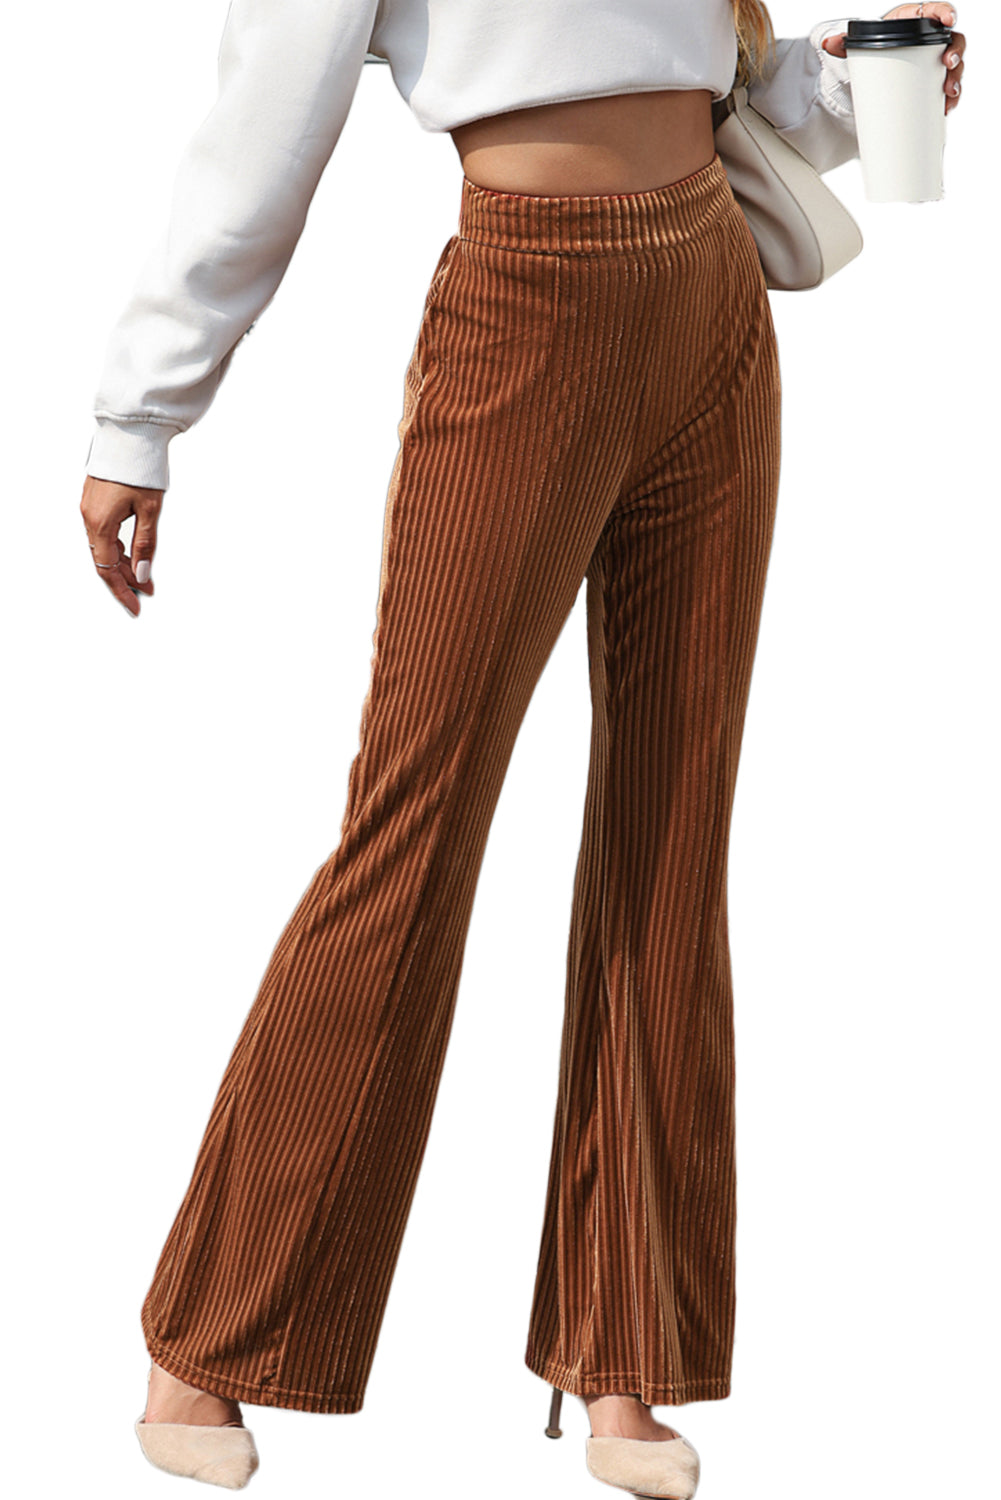 Chestnut Solid Color High Waist Flare Corduroy Pants